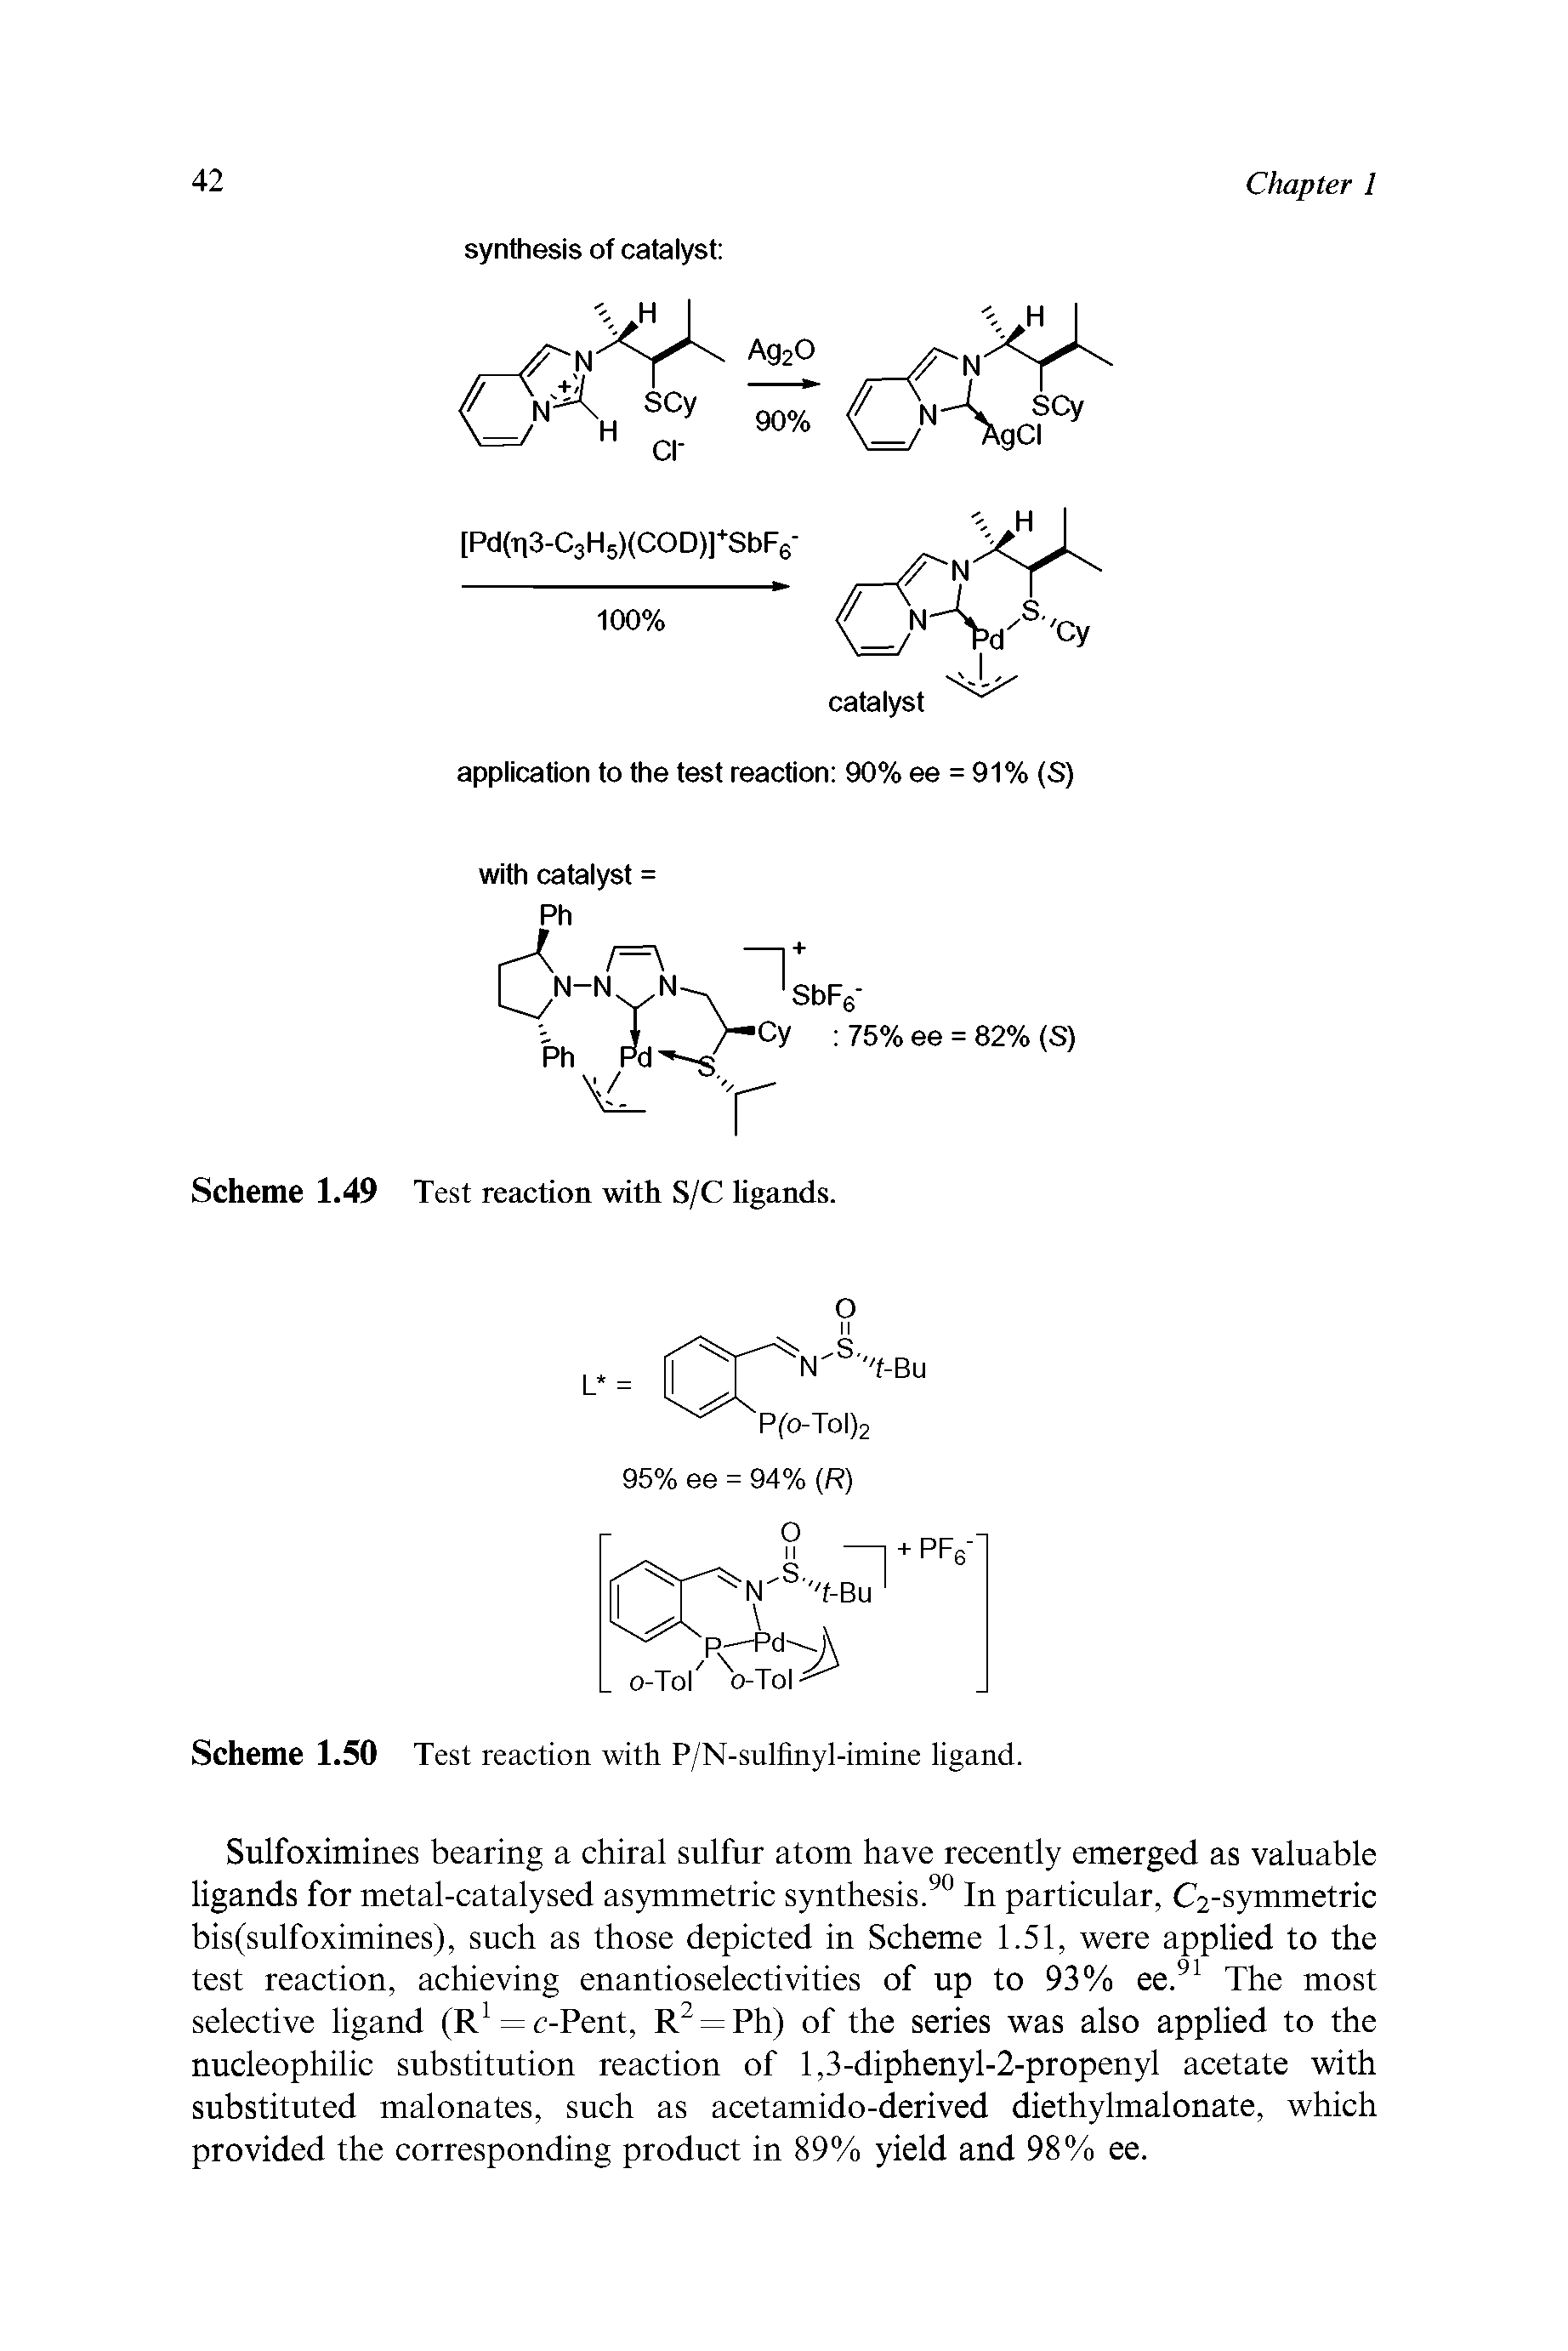 Scheme 1.50 Test reaction with P/N-sulfinyl-imine ligand.